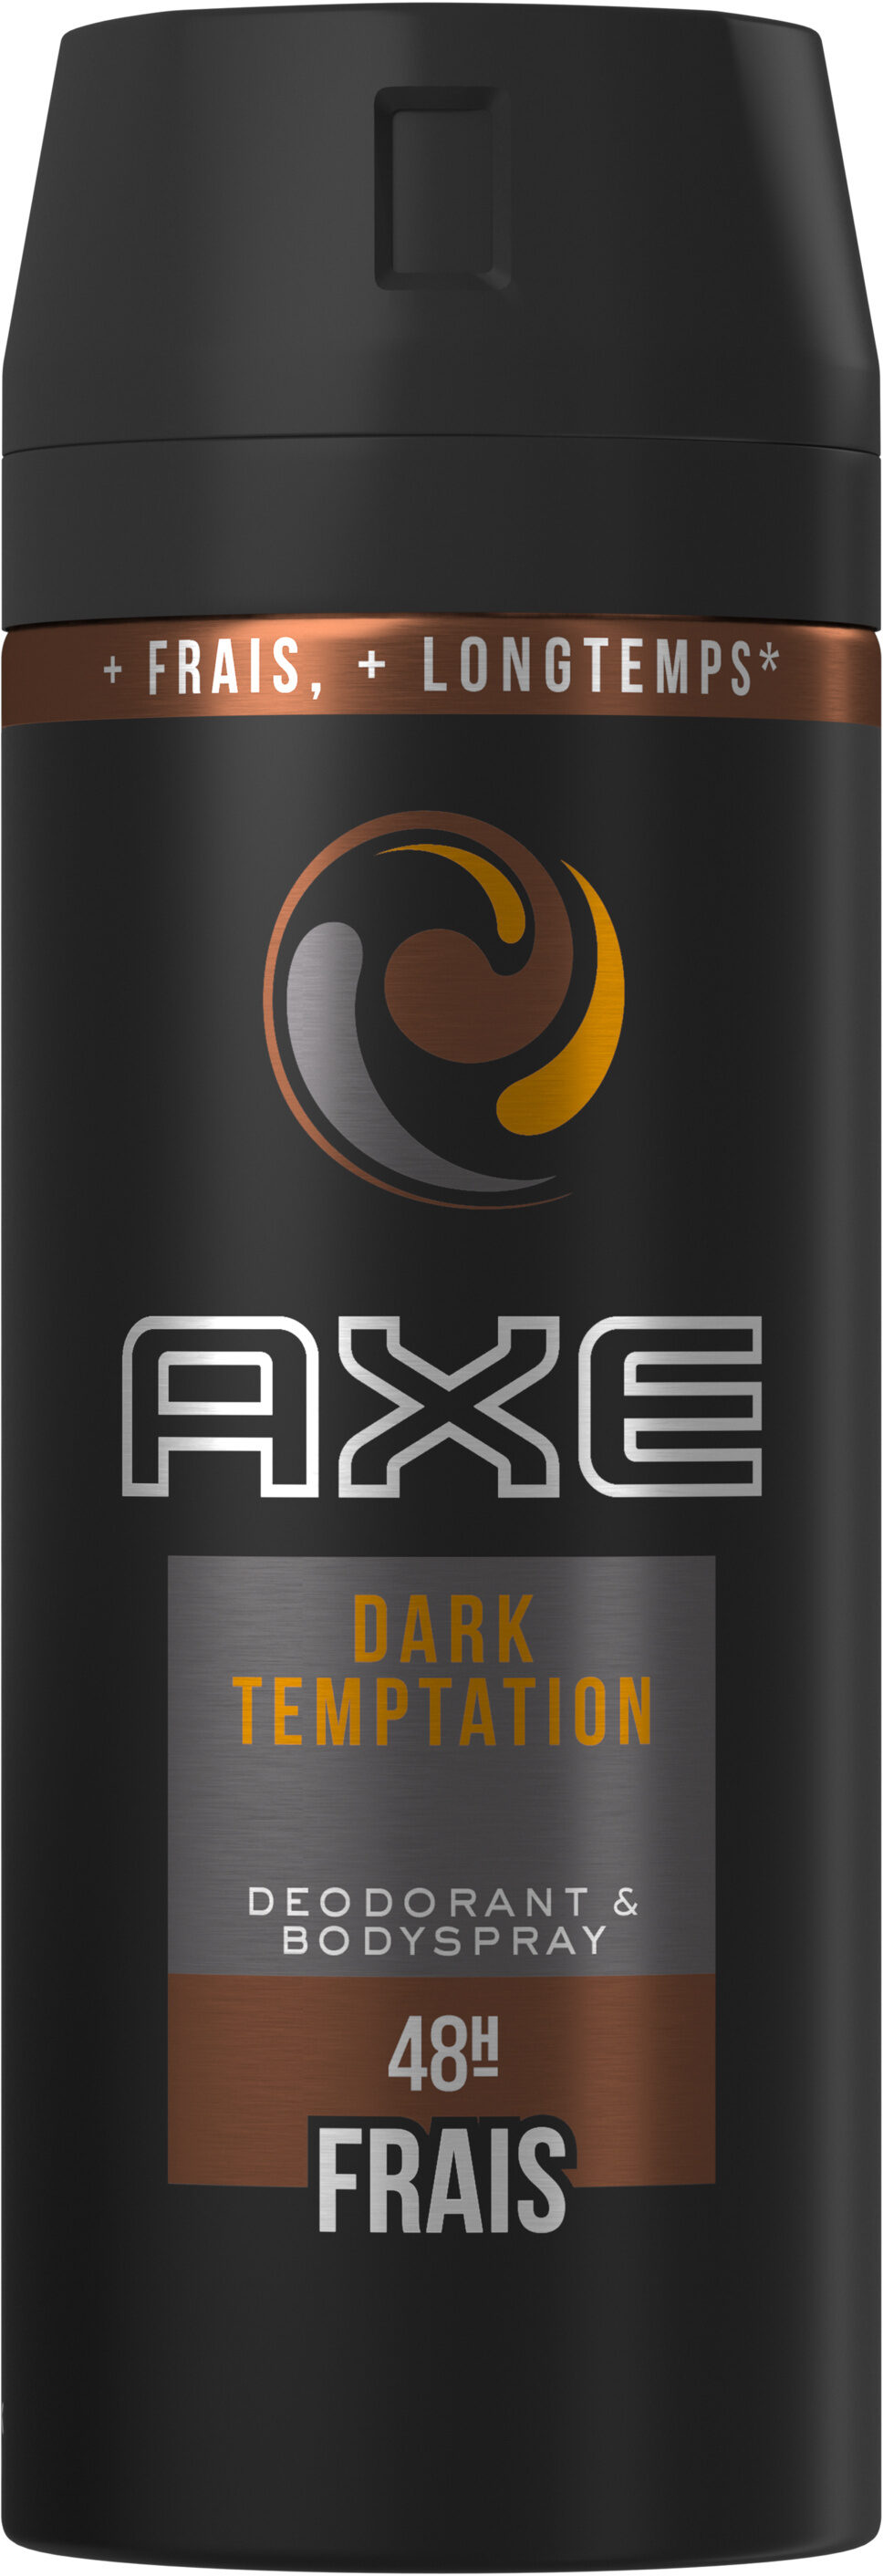 AXE Déodorant Bodyspray Homme Dark Temptation 48h Non-Stop Frais - Product - fr